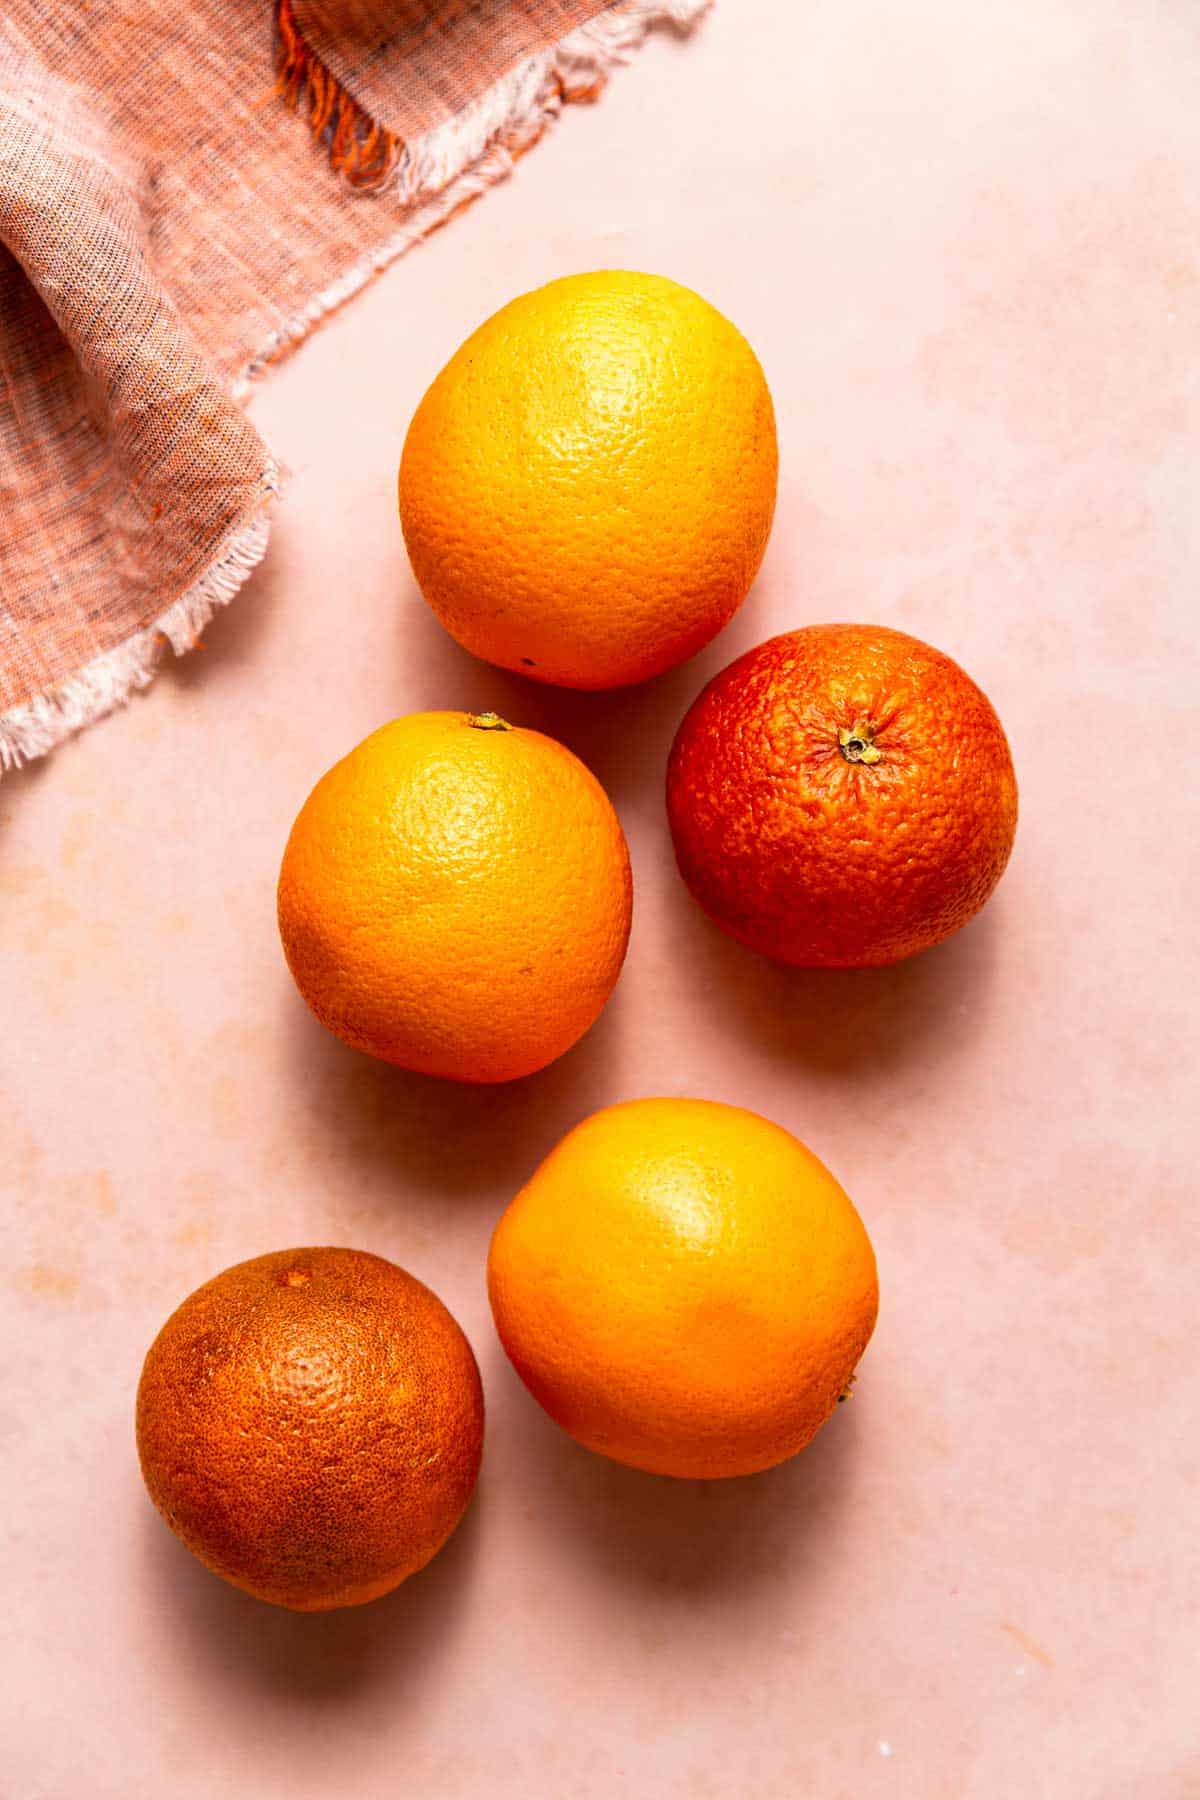 Three oranges and two blood oranges used to make blood orange ice cubes.